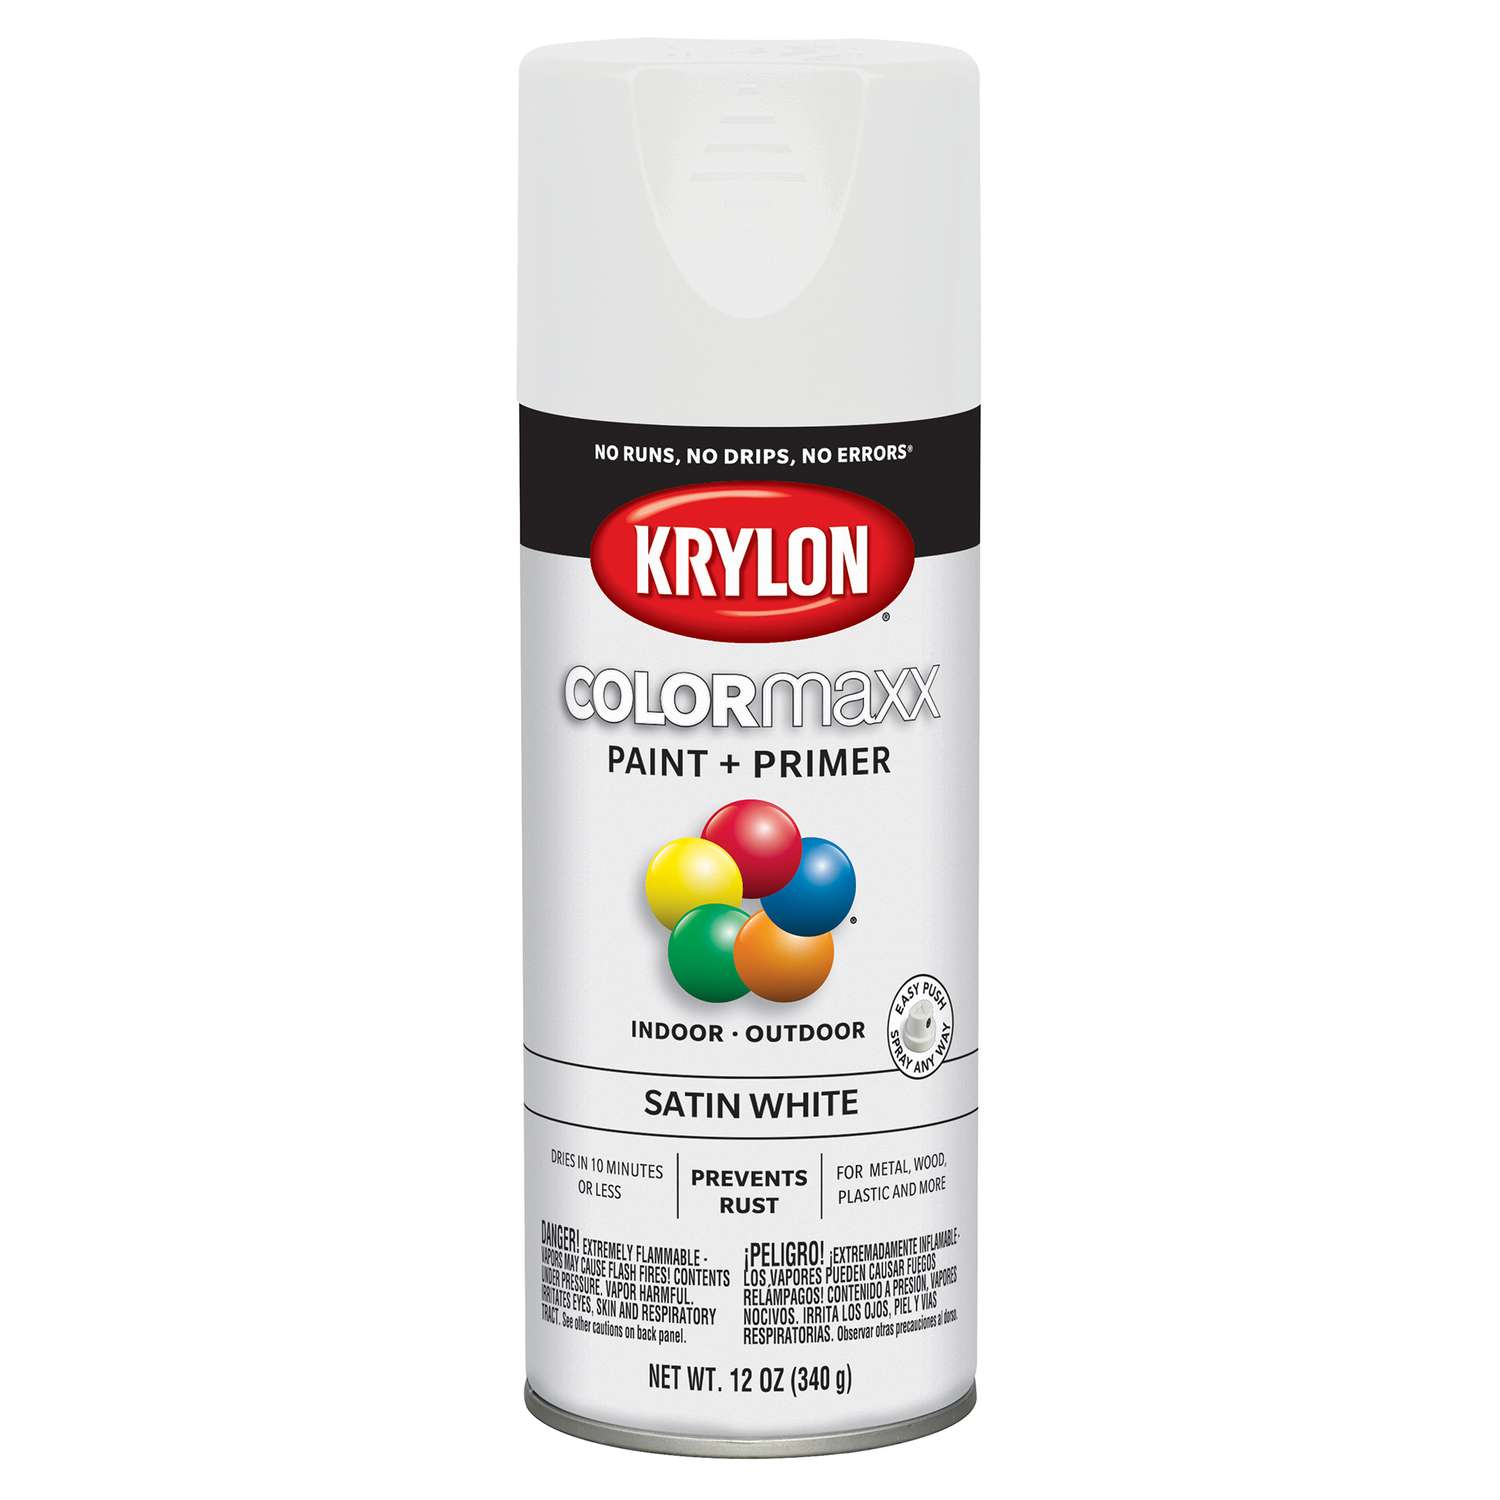 Krylon Glitter Blast Starry Night Spray Paint 5.75 oz - Ace Hardware